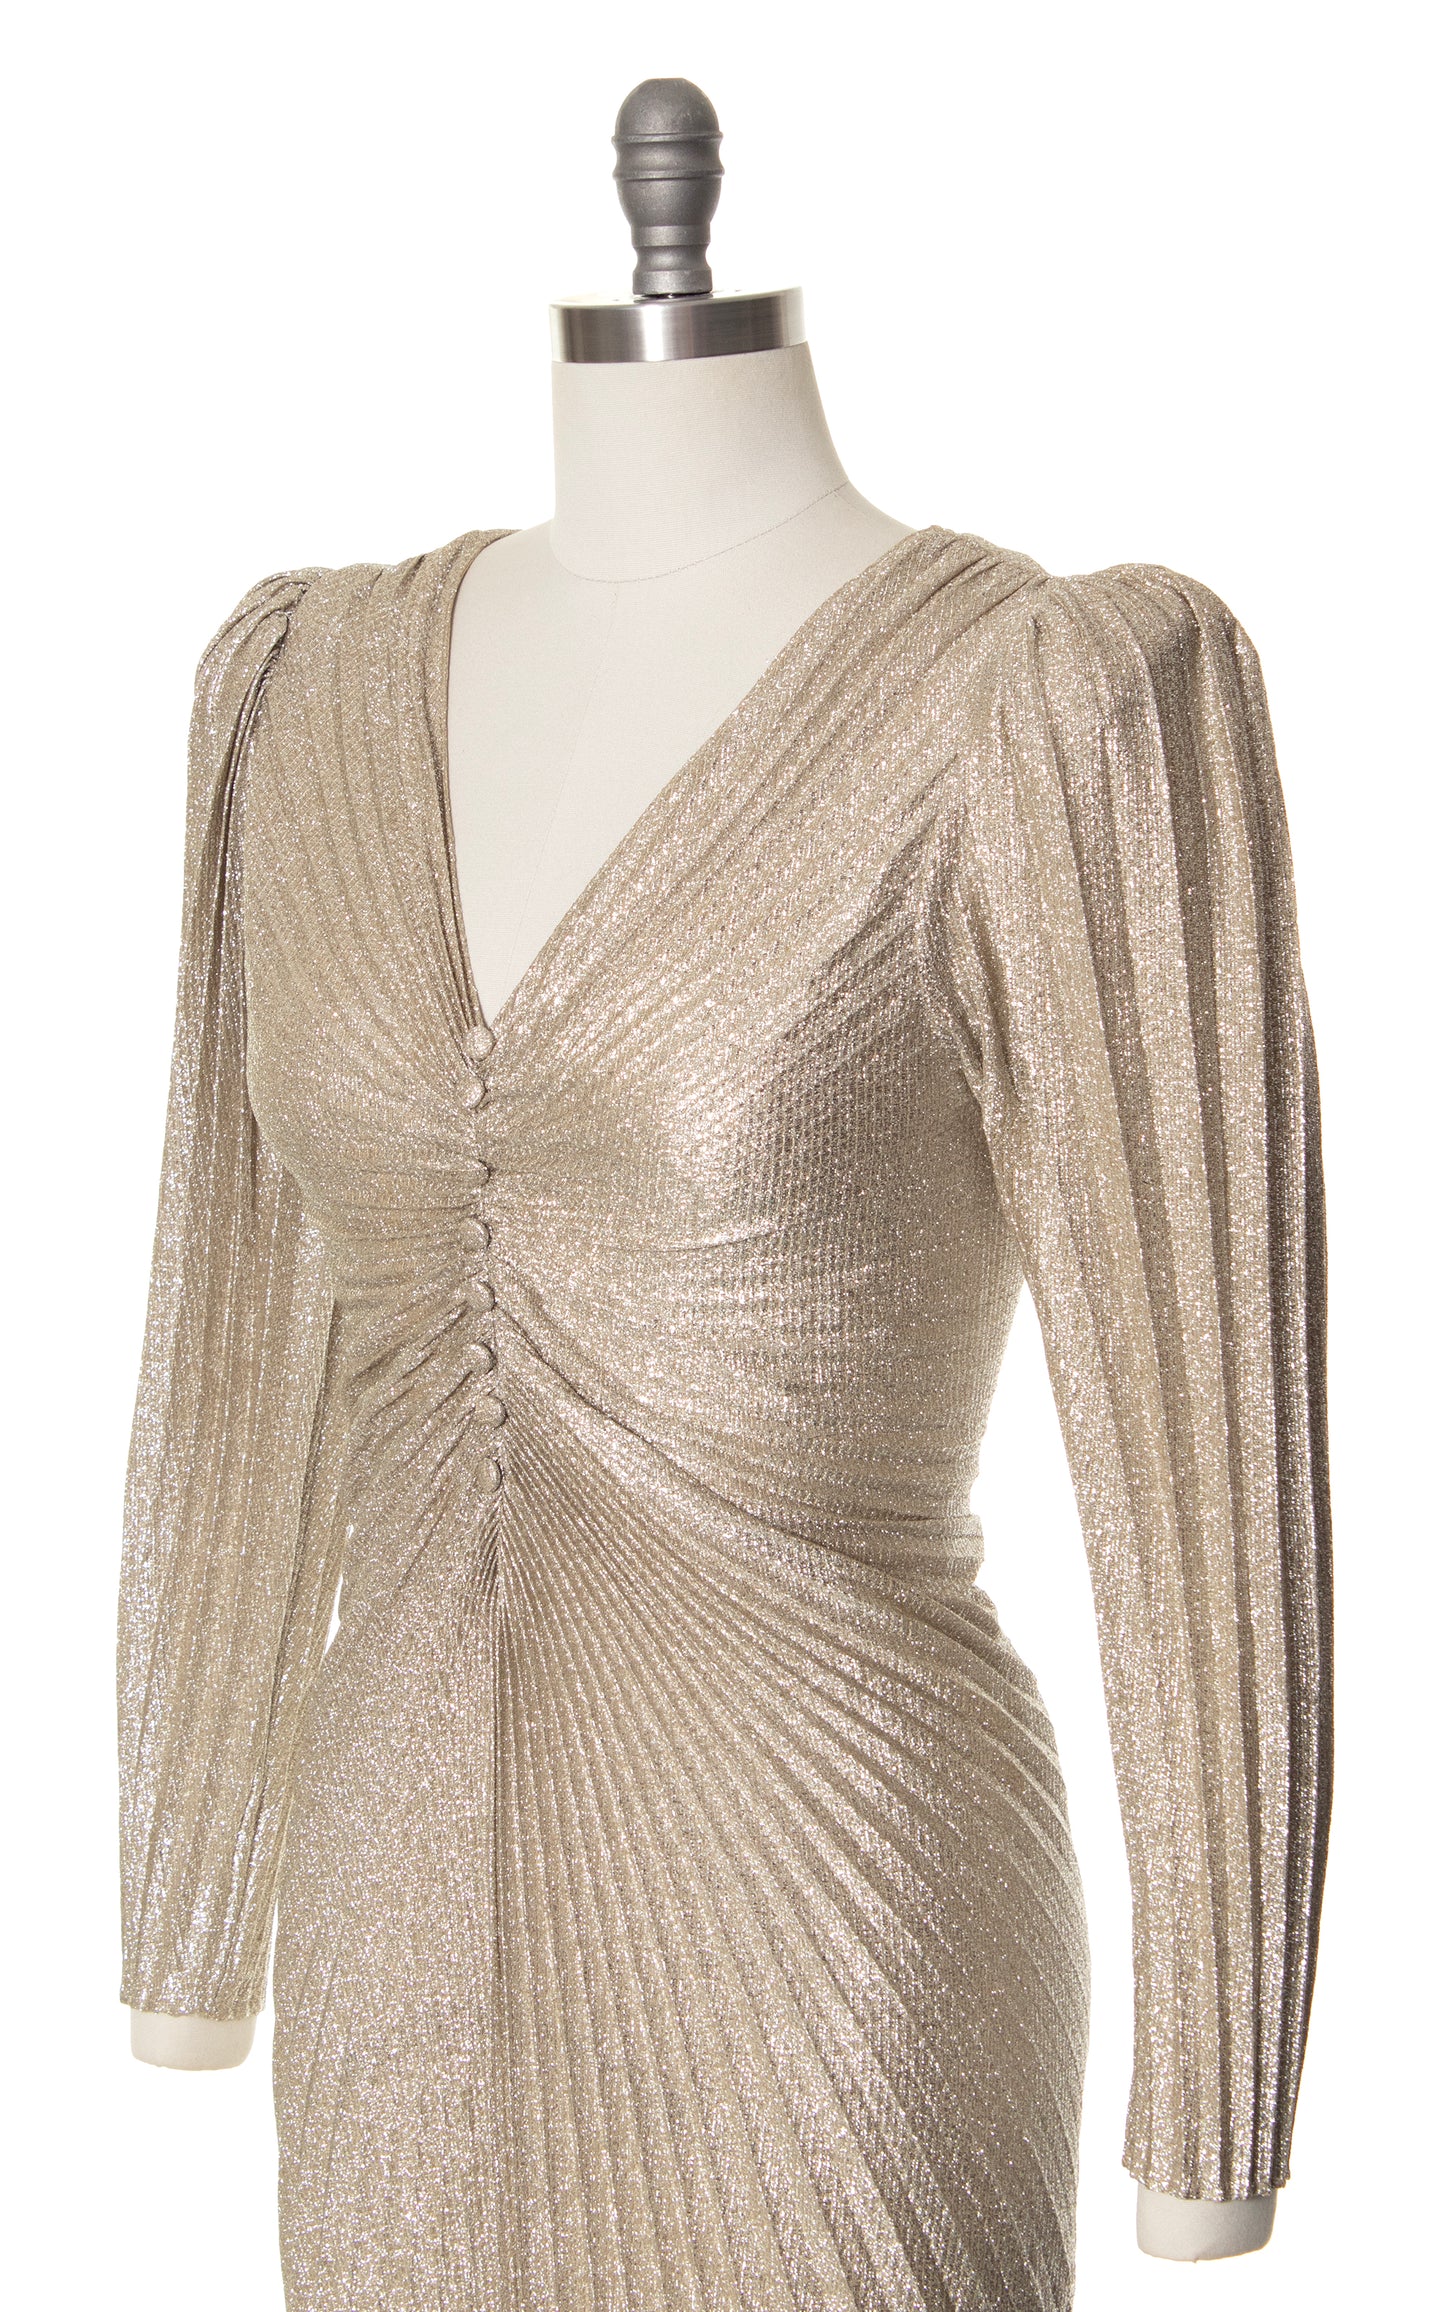 1980s NEW LEAF Travilla Style Metallic Pleated Dress | x-small/small